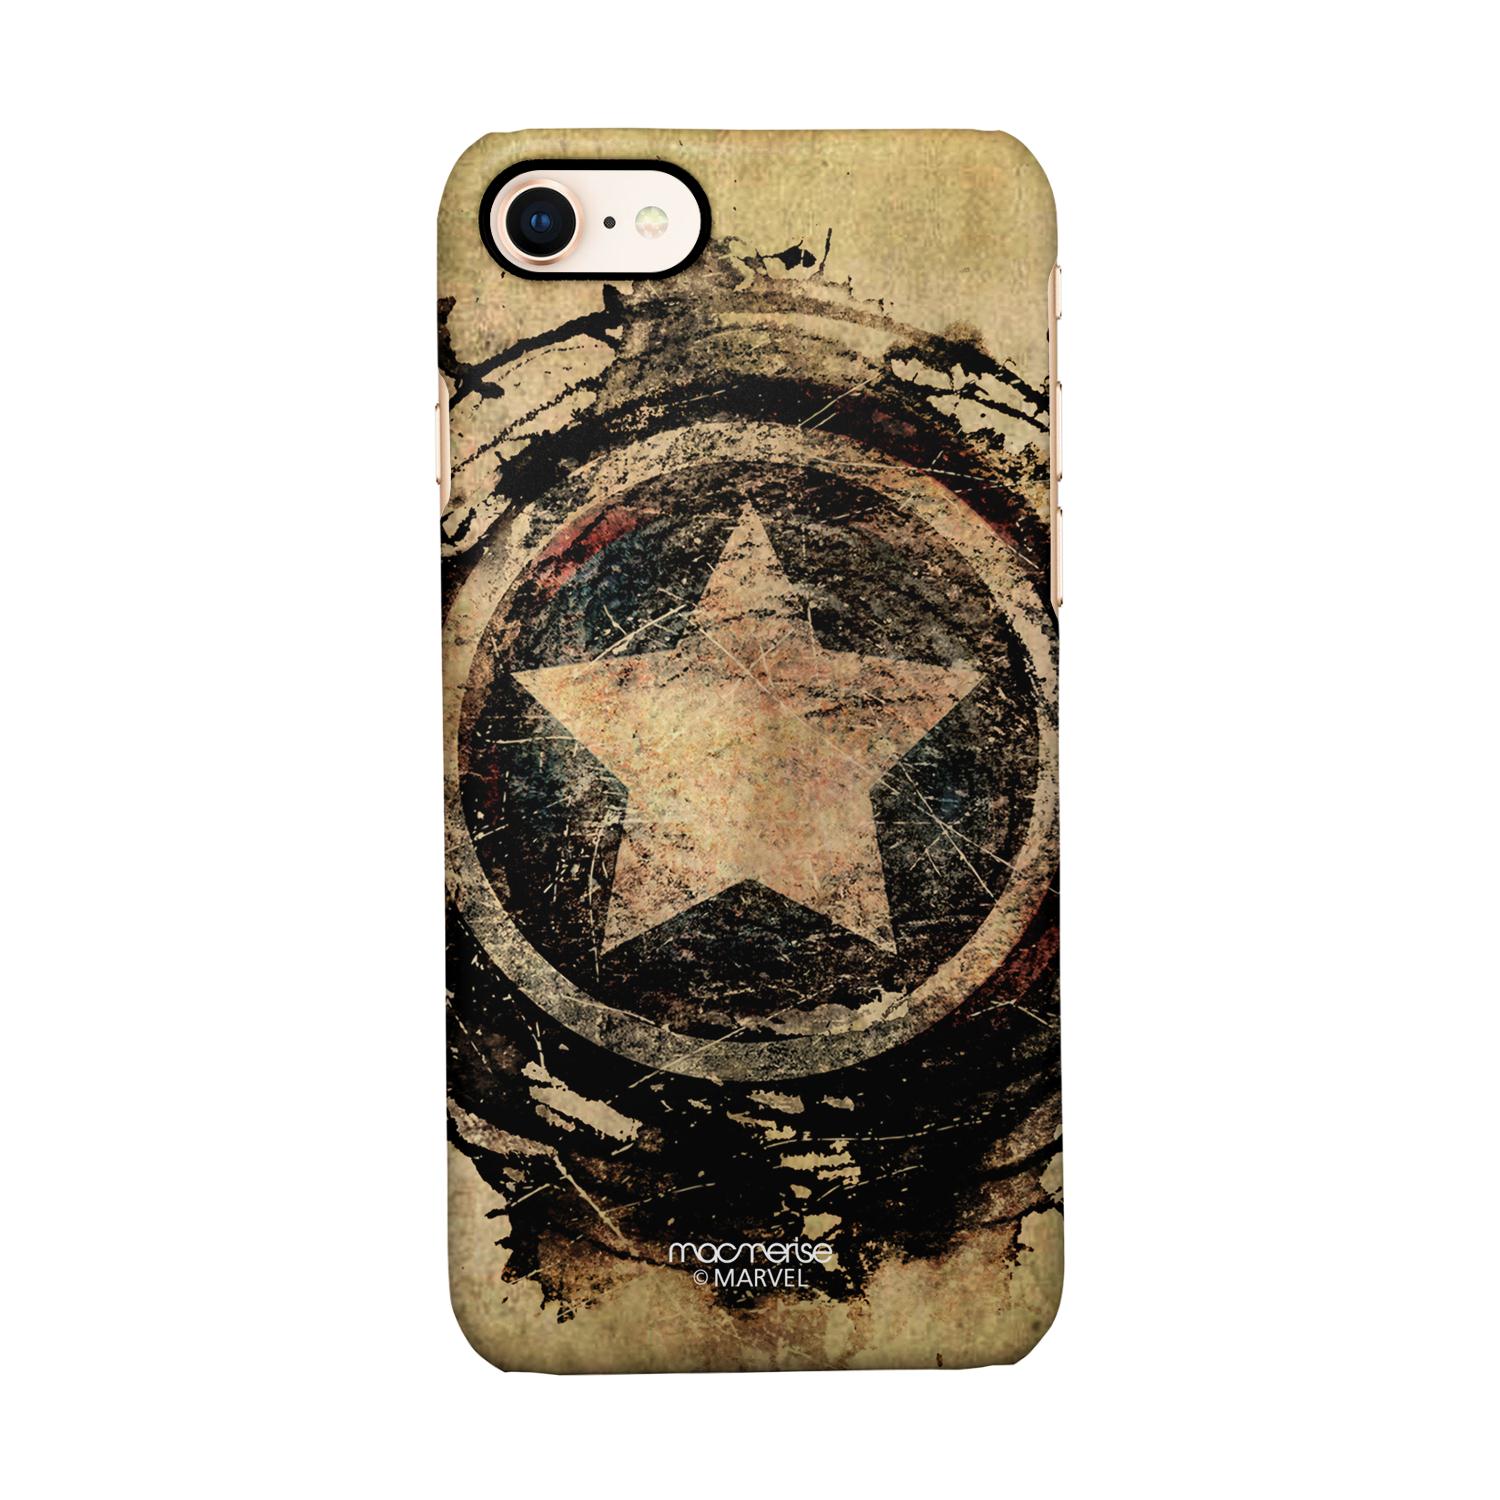 Buy Symbolic Captain Shield - Sleek Phone Case for iPhone 8 Online